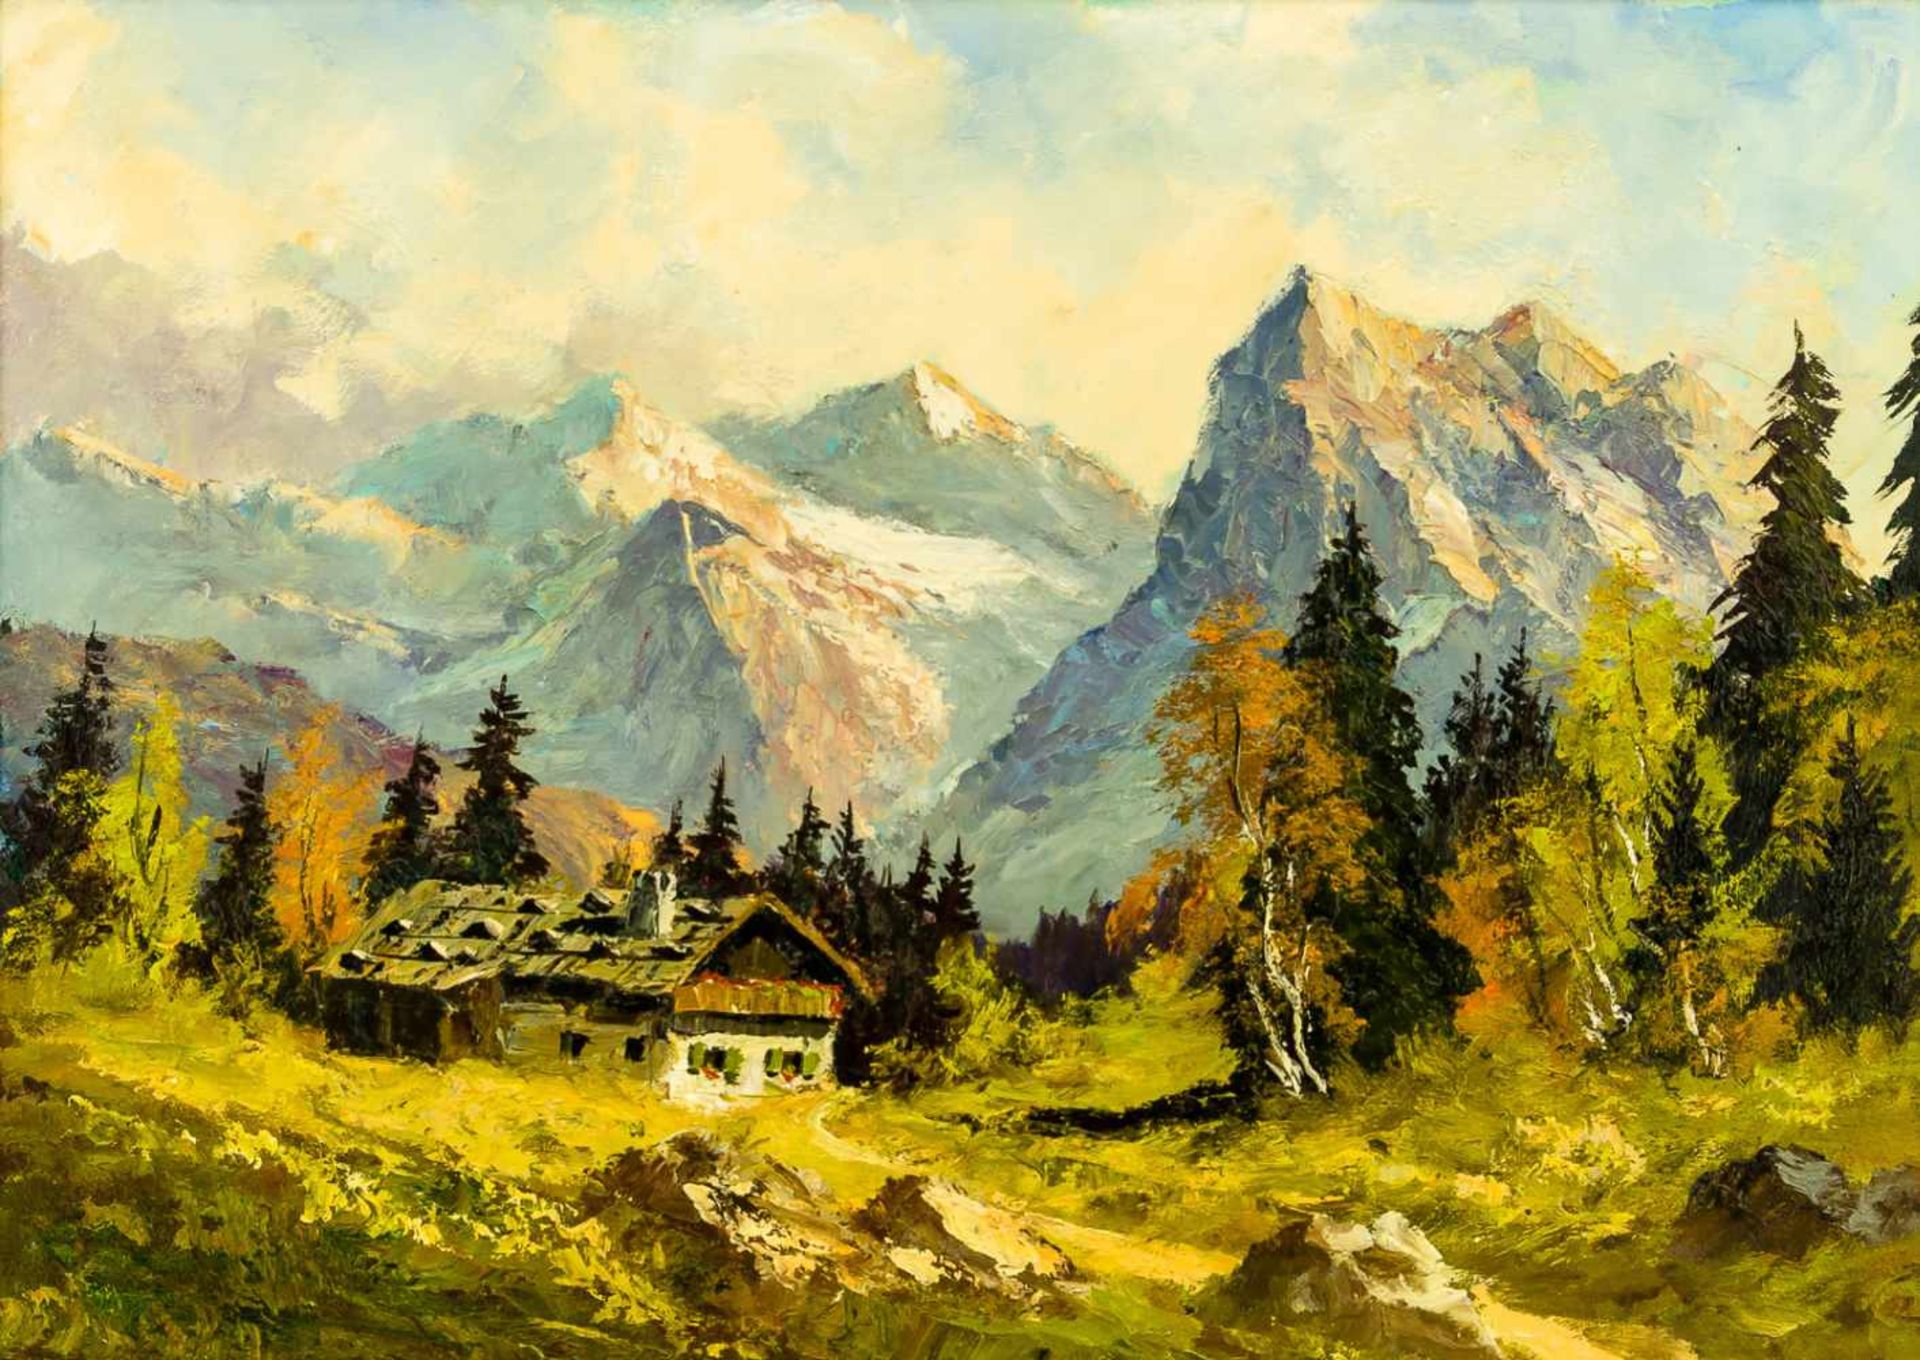 Karwendelgebirge Öl / Leinwand, rückseitig "Georg Kiste" bezeichnet 51 x 70 cm, mit Rahmen 65,5 x 86